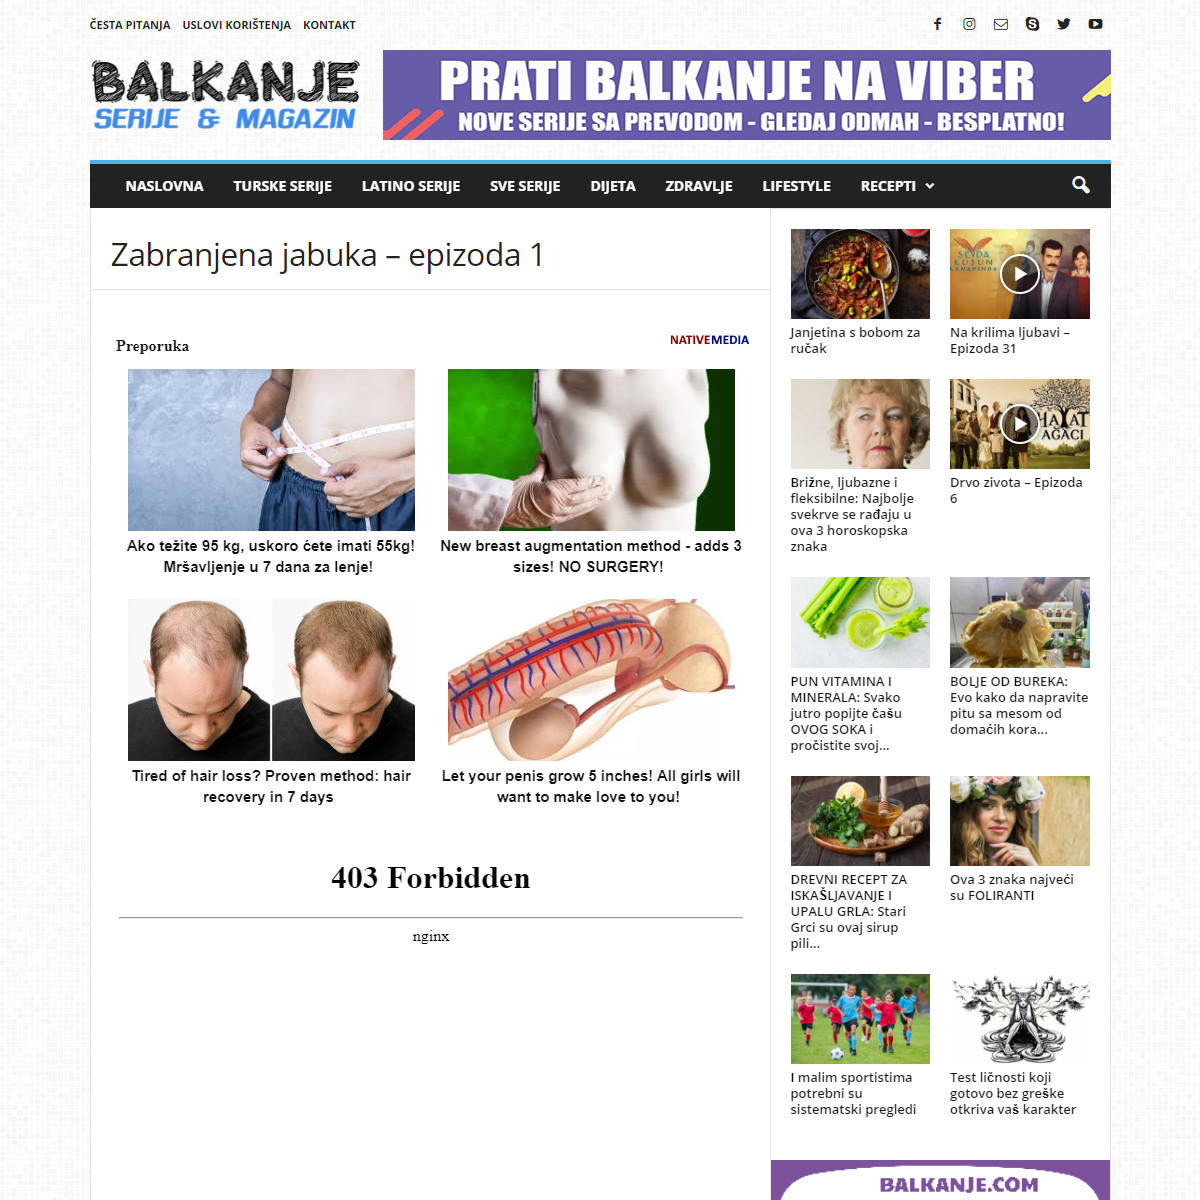 A complete backup of https://balkanje.com/zabranjena-jabuka-epizoda-1/